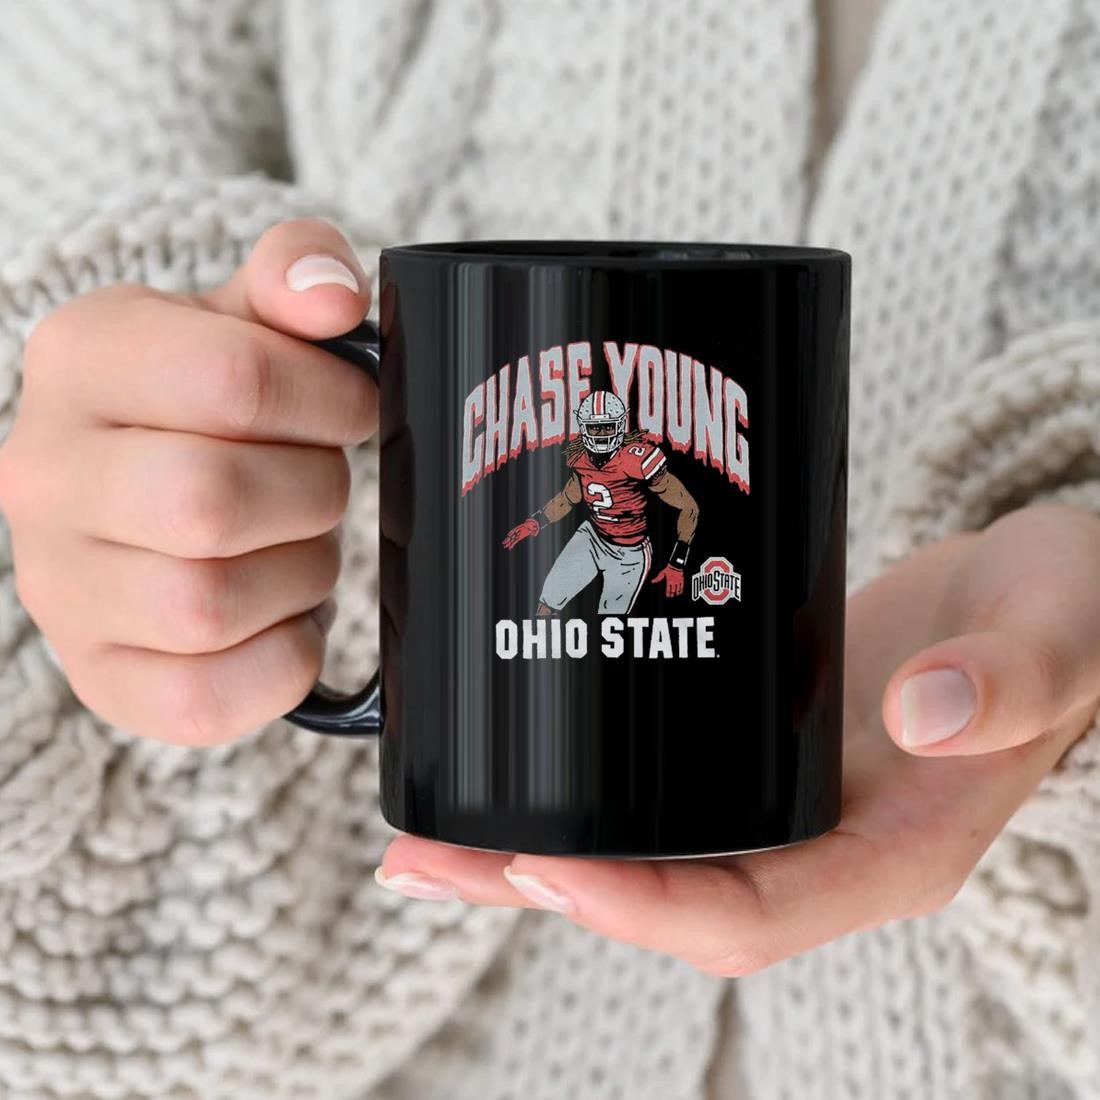 Chase Young Ohio State Nfl Mug